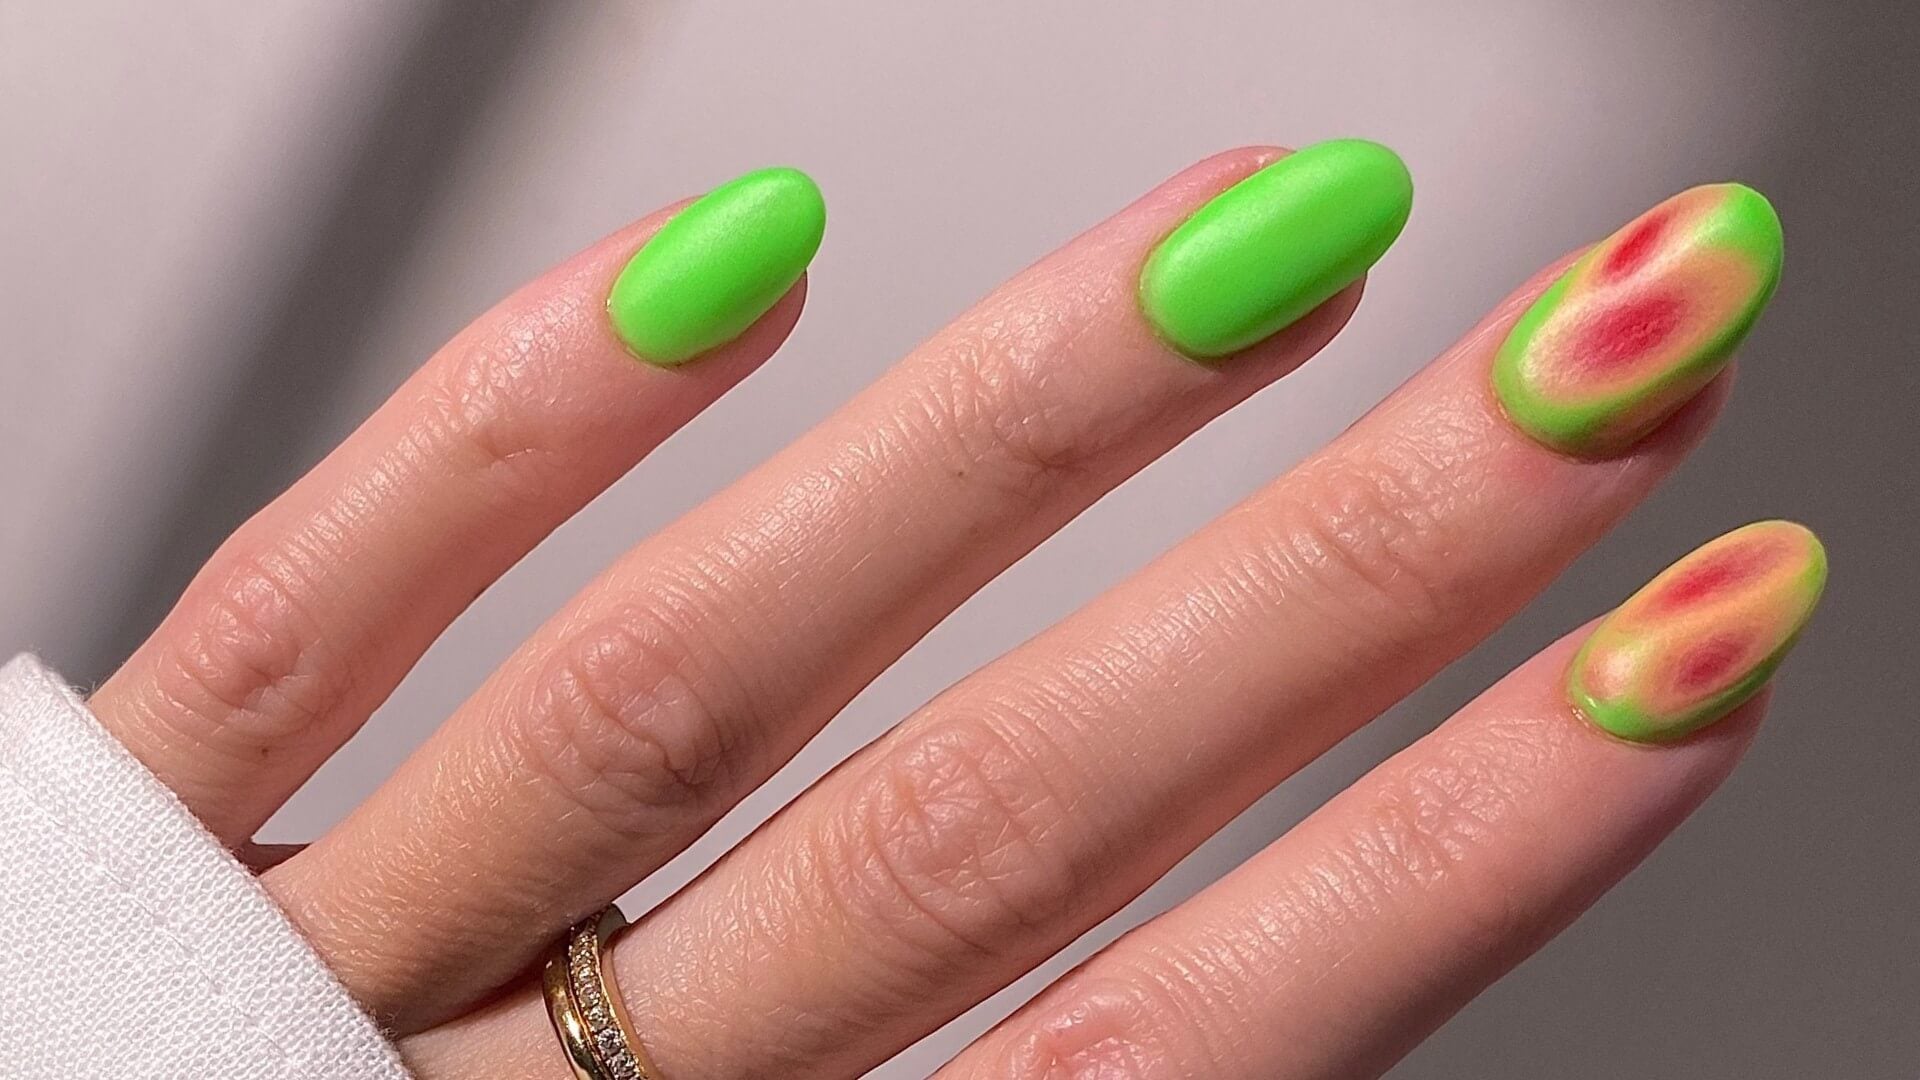 10 examples of neon green nails that absolutely kill it | Kiara Sky